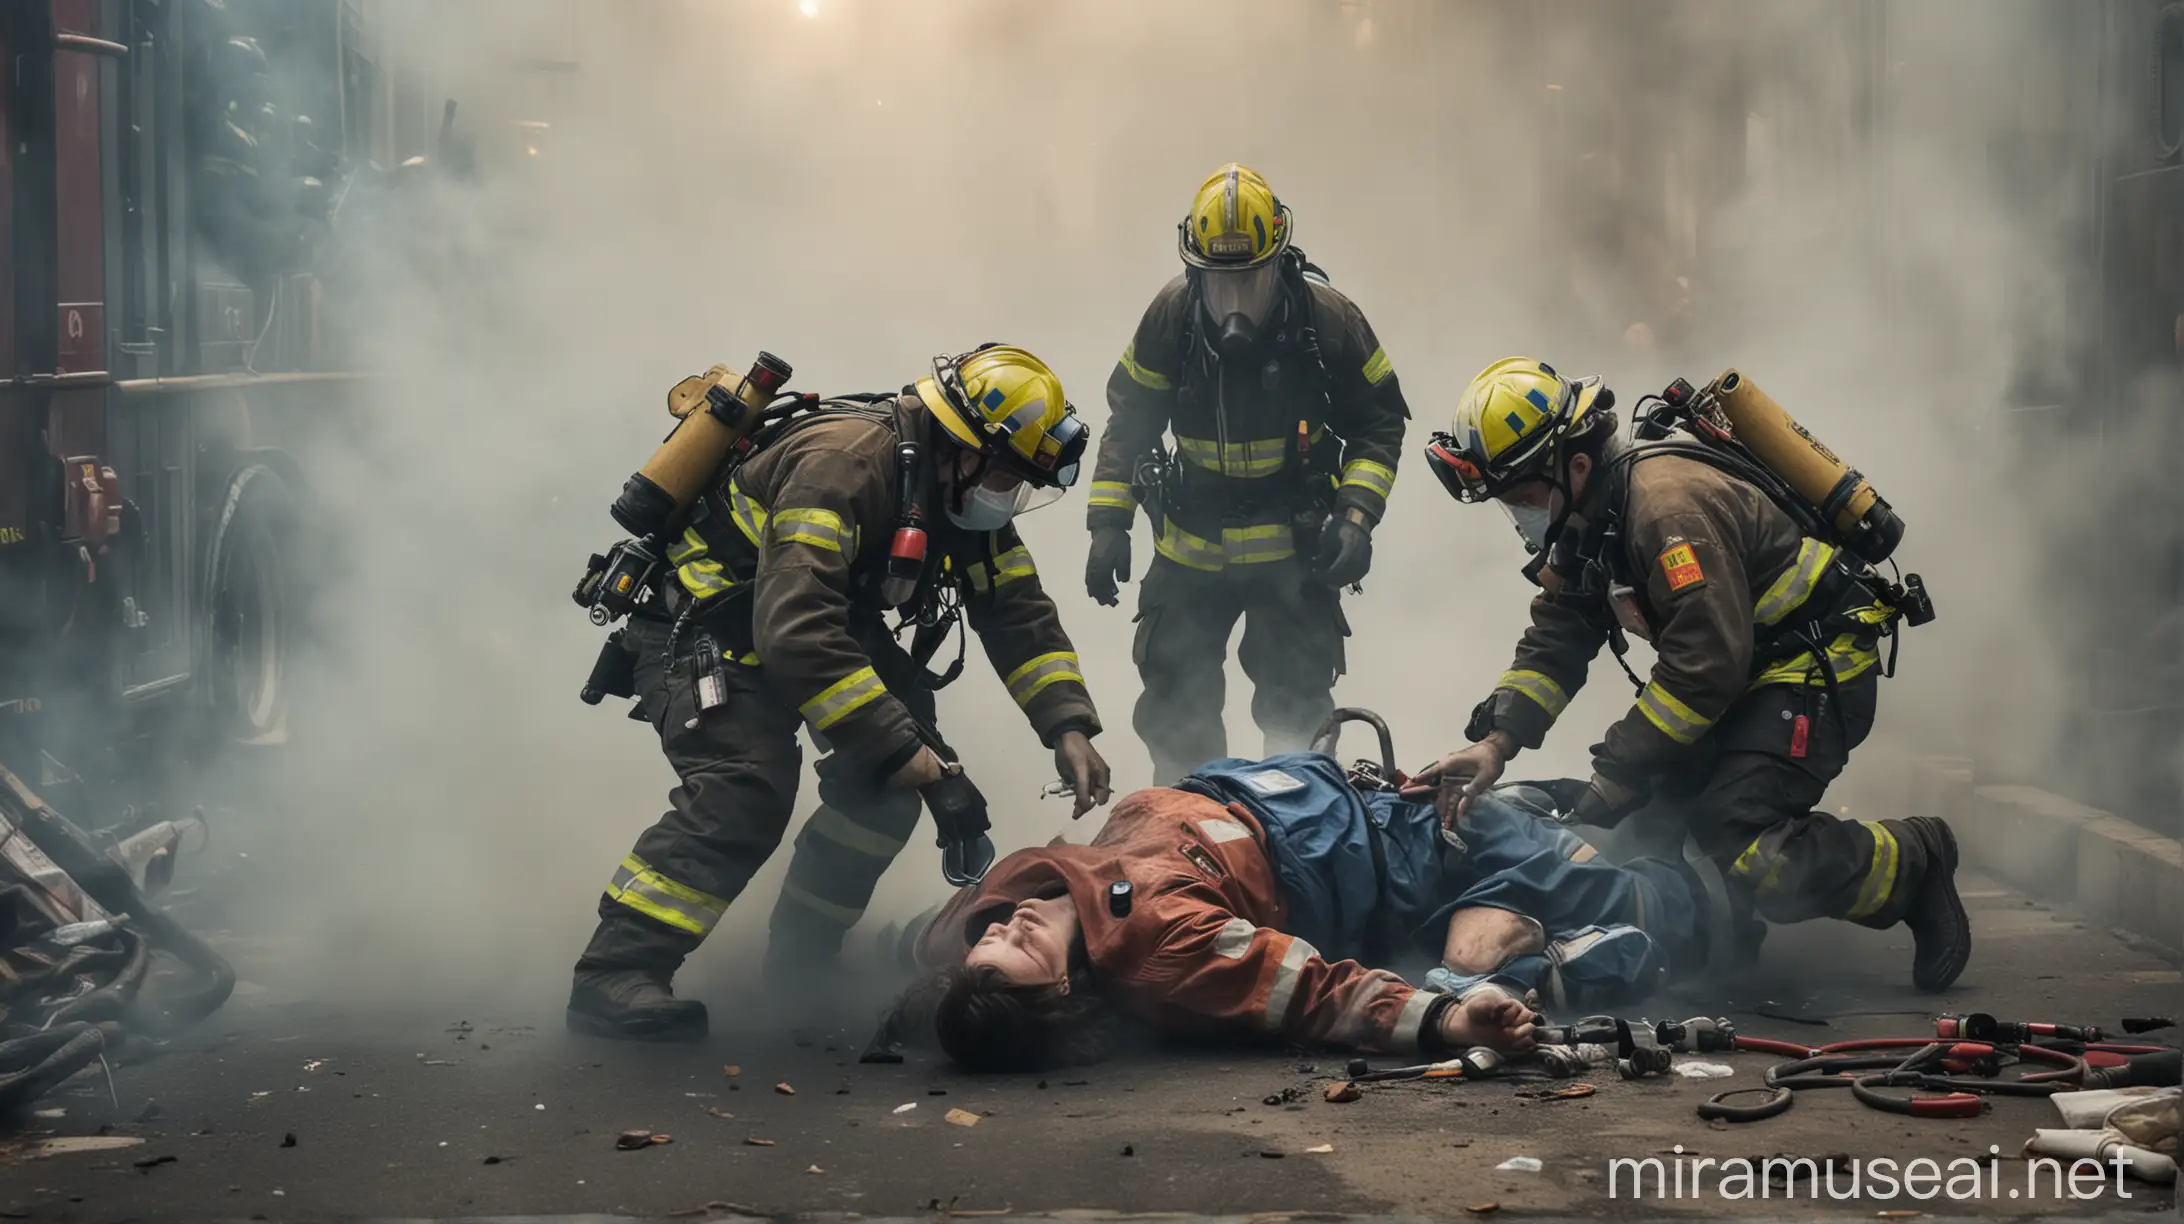 Paramedics Resuscitating Unconscious Patient Amidst Chaos and Emergency Response